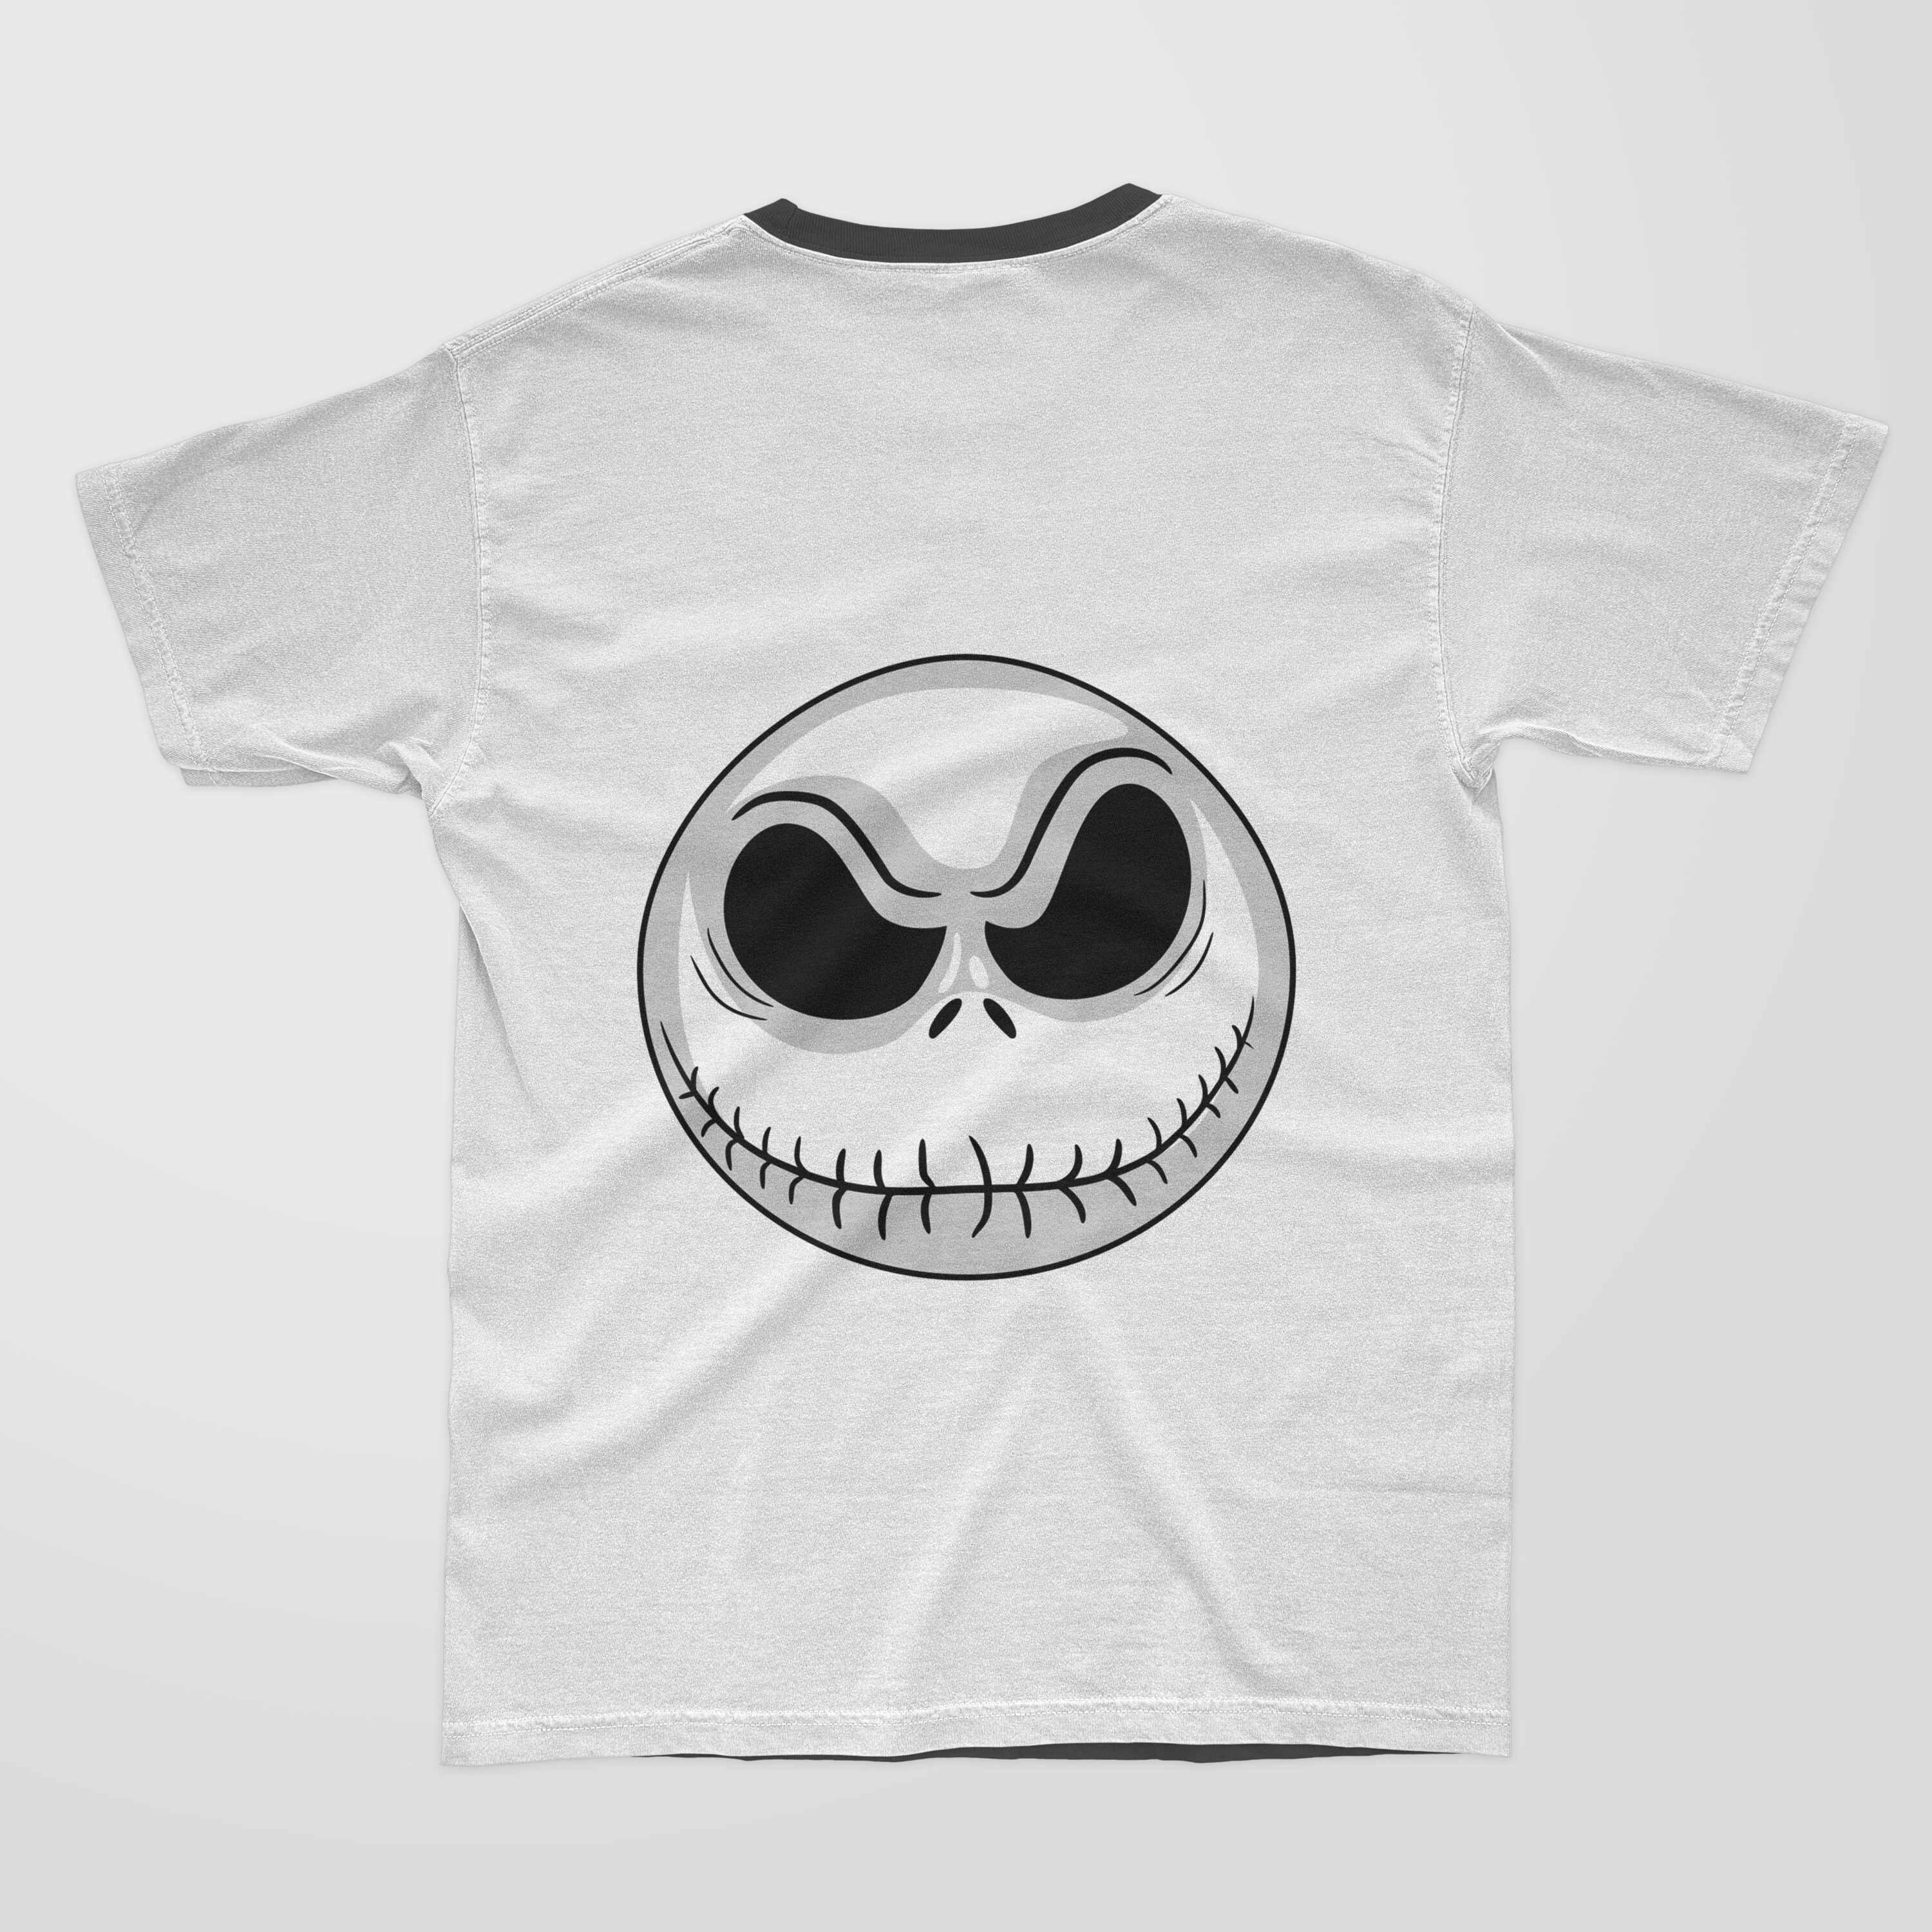 Creative t-shirt design.